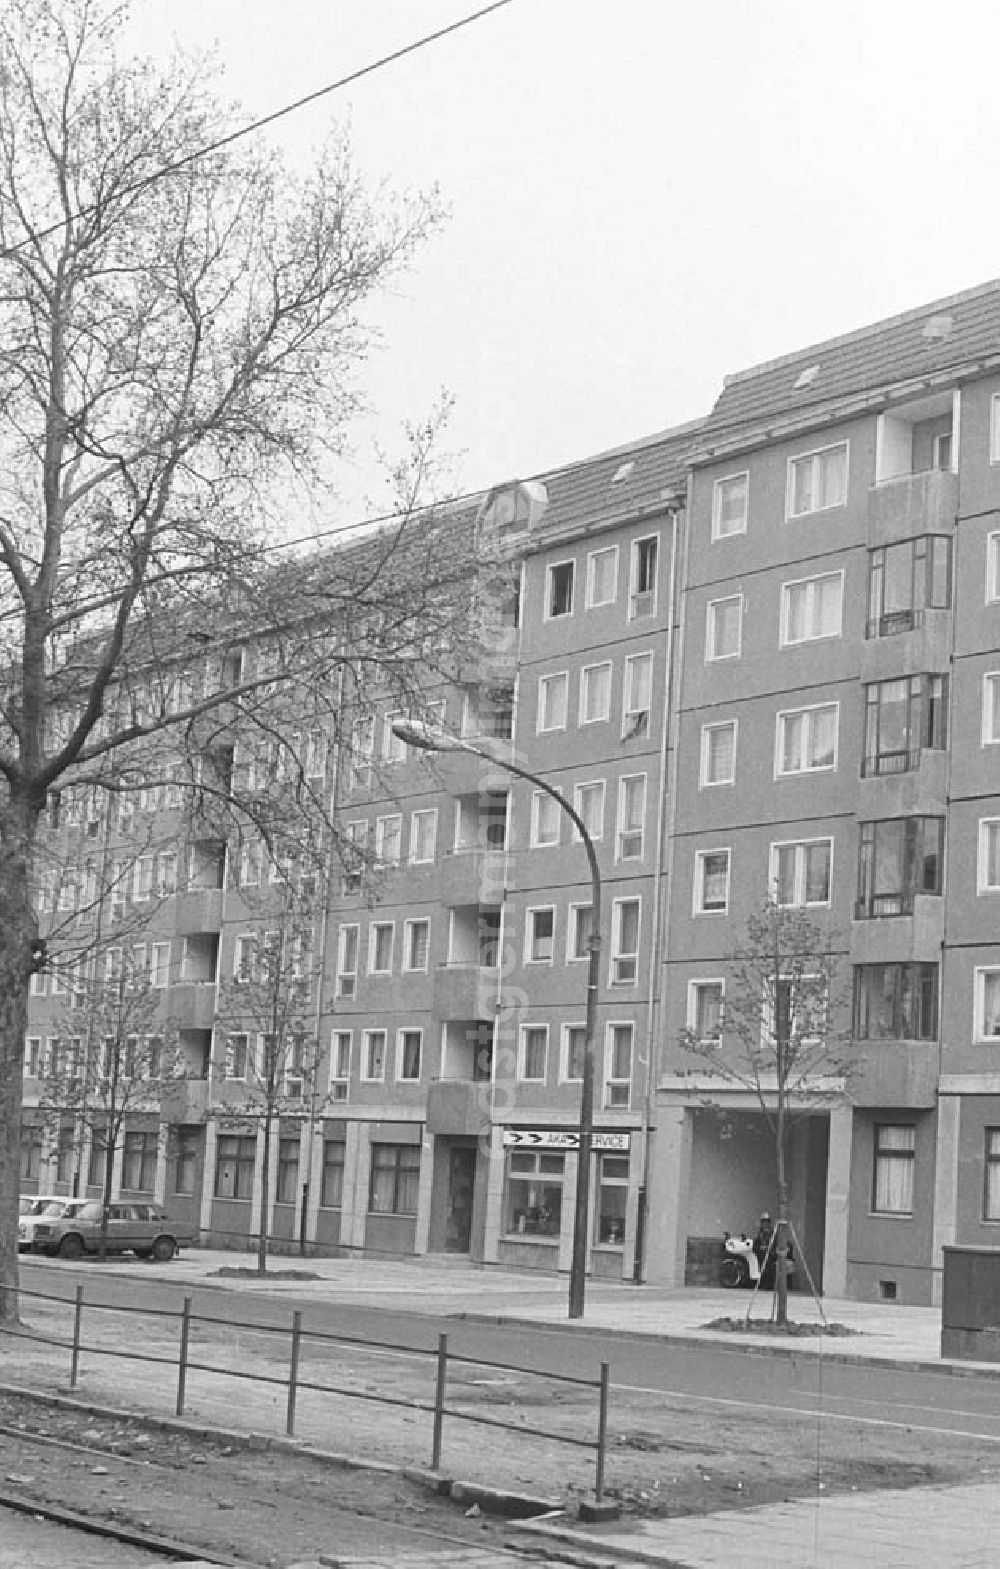 GDR picture archive: Berlin Prenzlauer Berg - 09.